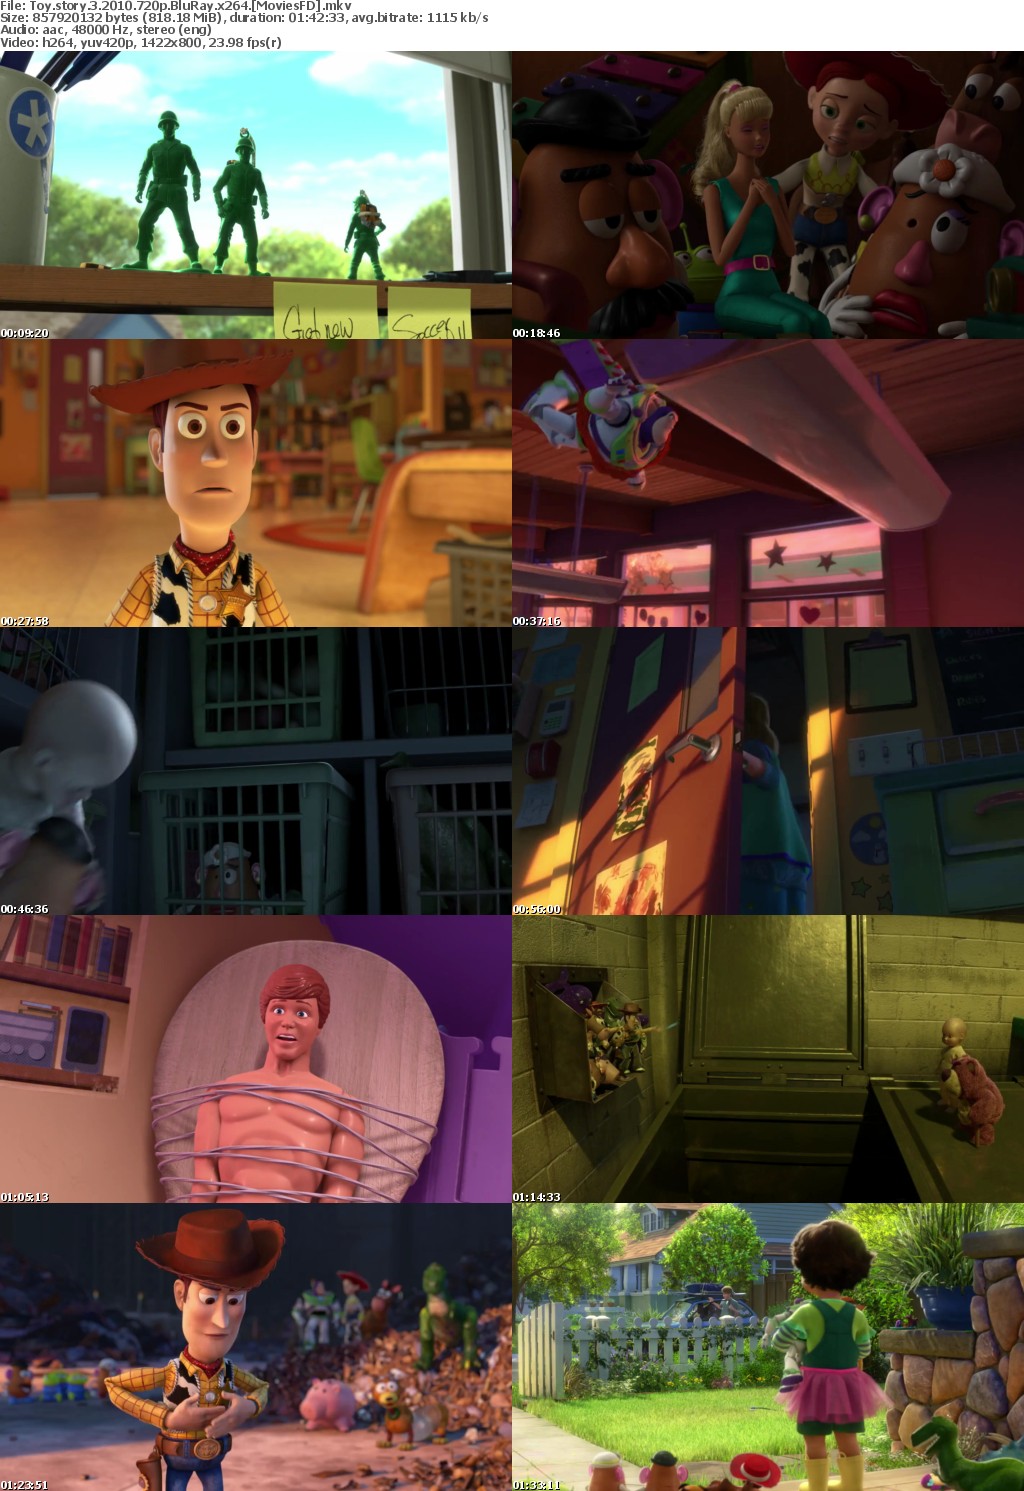 Toy Story 3 (2010) 720p BluRay x264 - MoviesFD